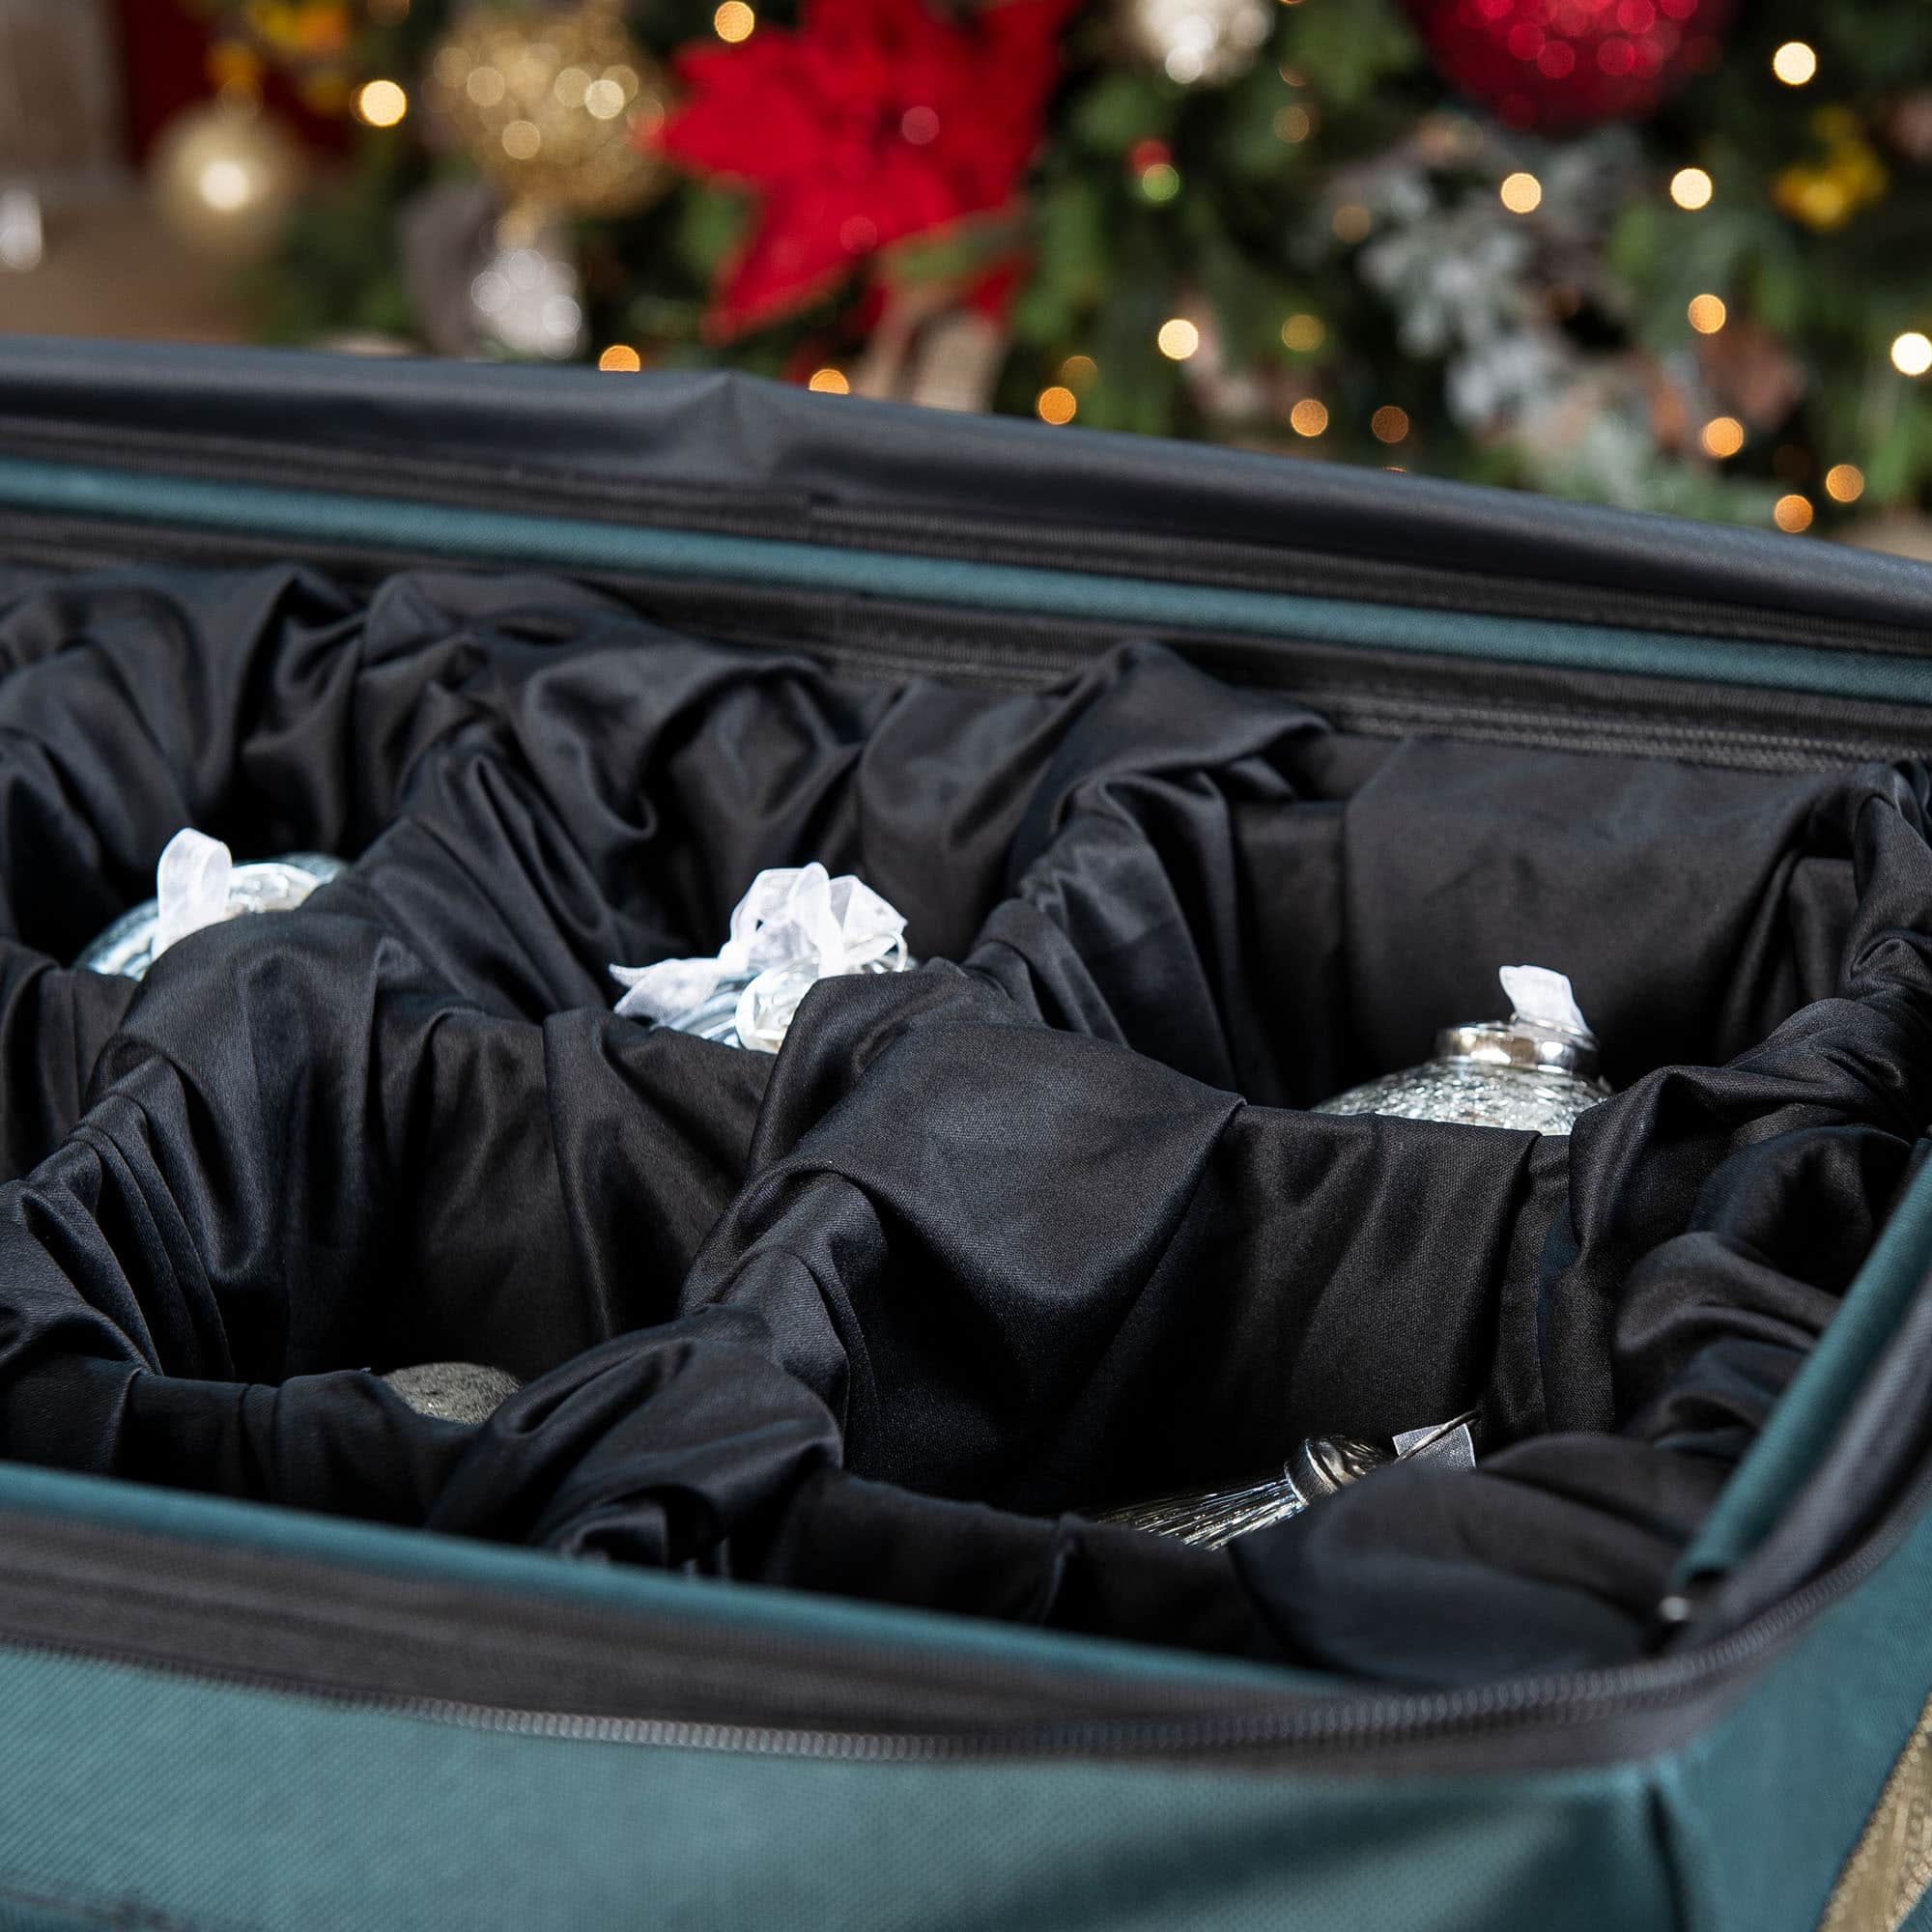 OrnamentKeeper - Ornament Storage Bag by TreeKeeper 